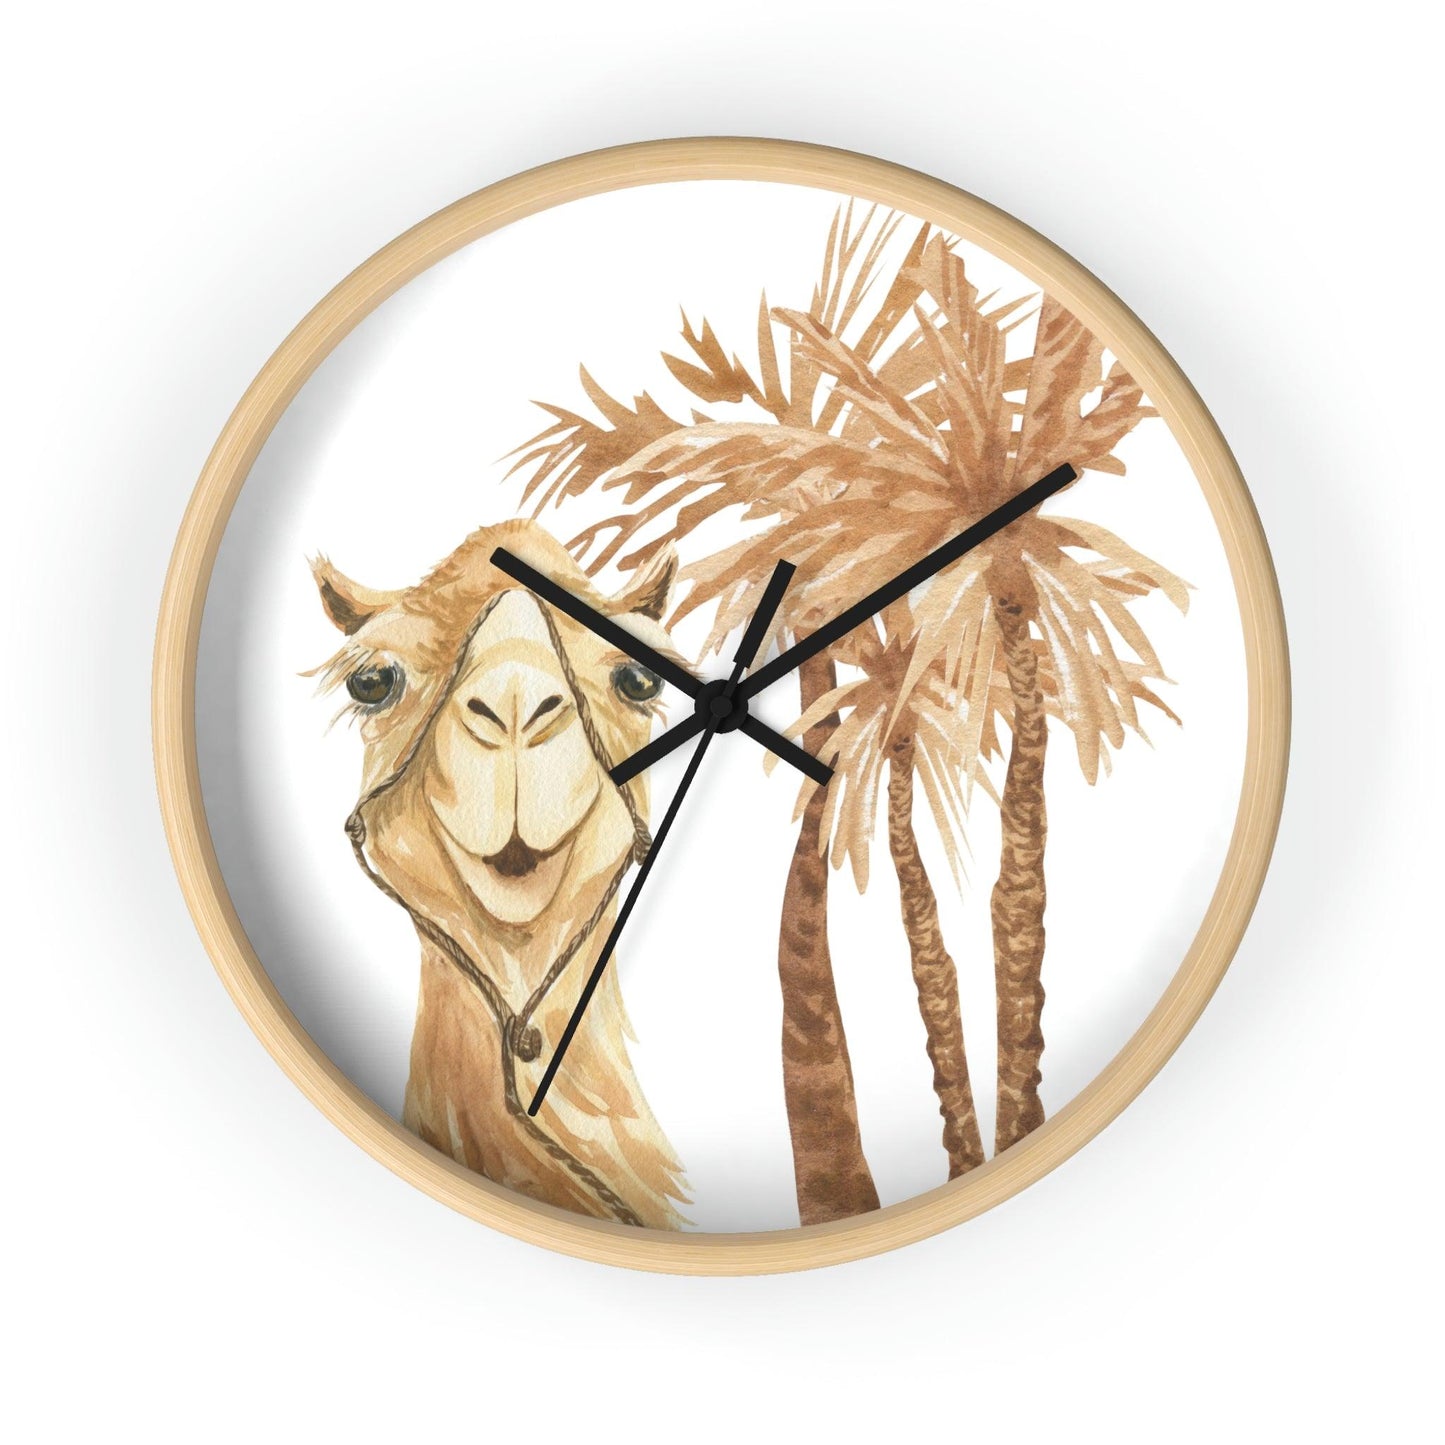 Moroccan Desert Camel Wall Clock - The Global Wanderer